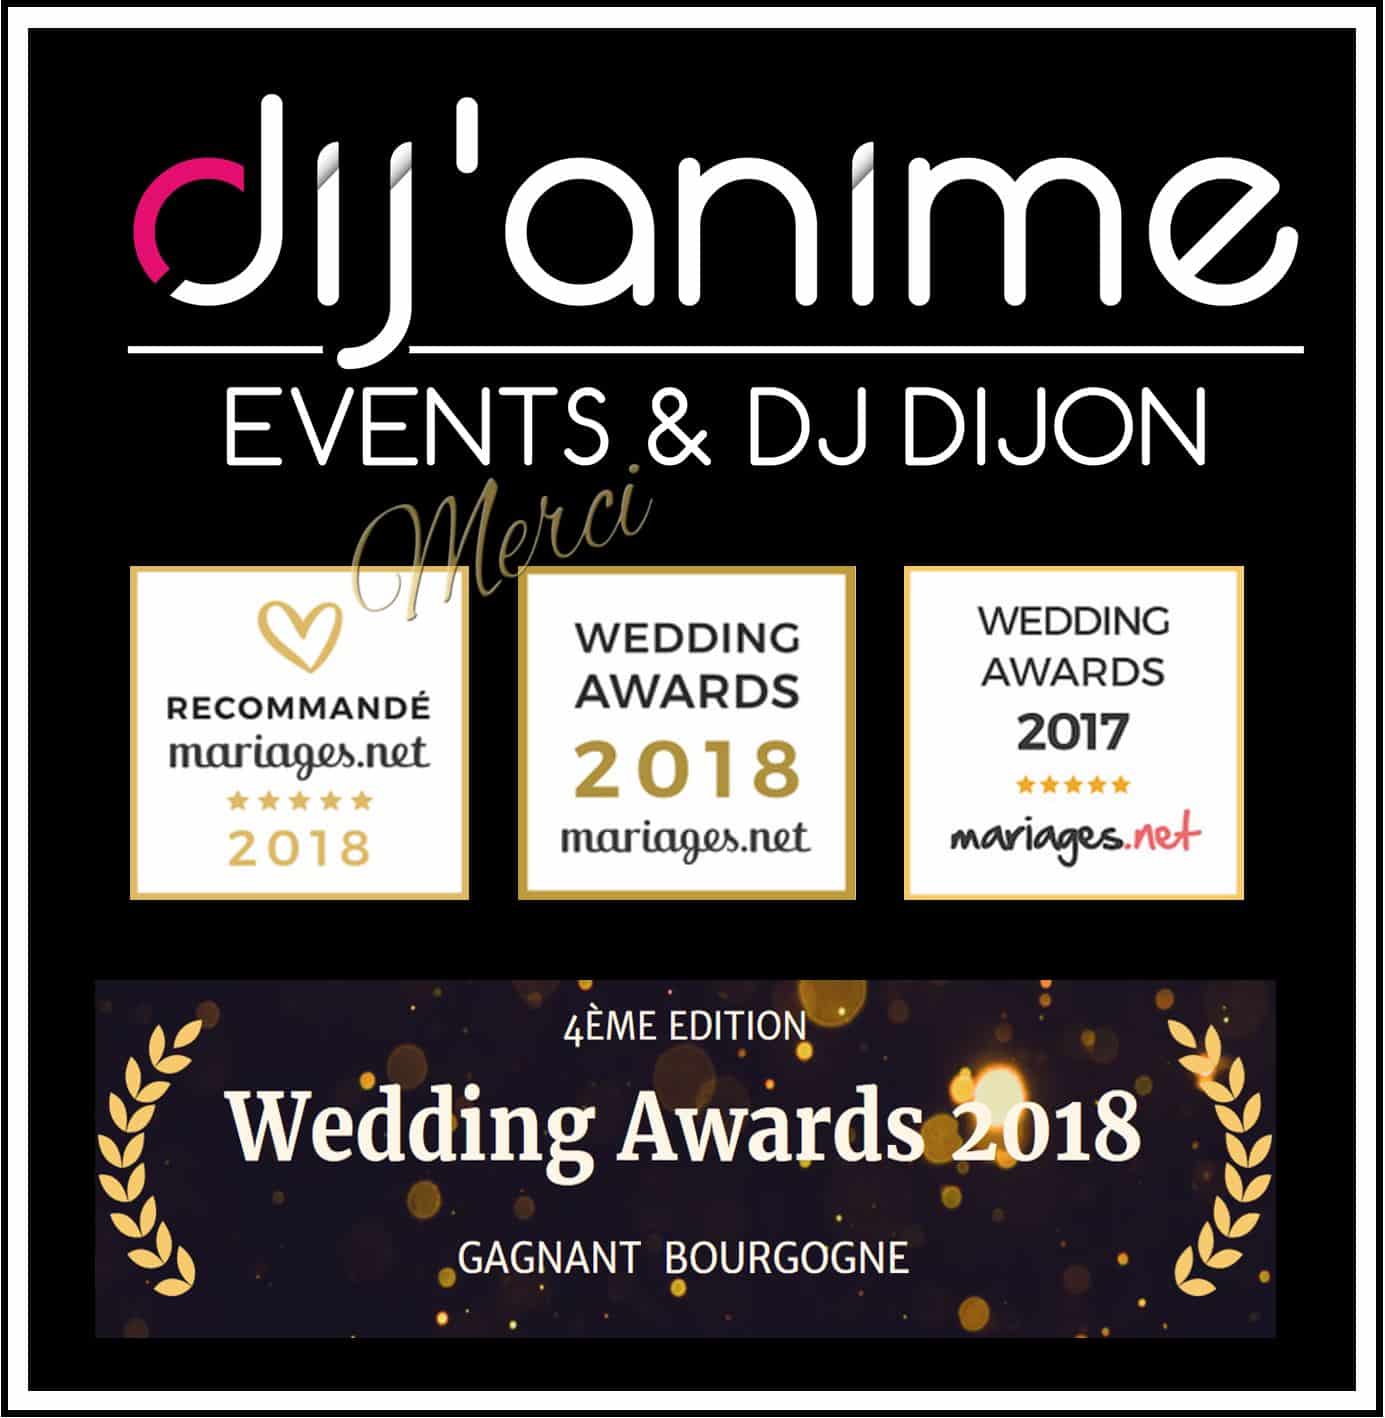 wedding awards 2017 avis et recommandations Dij'anime